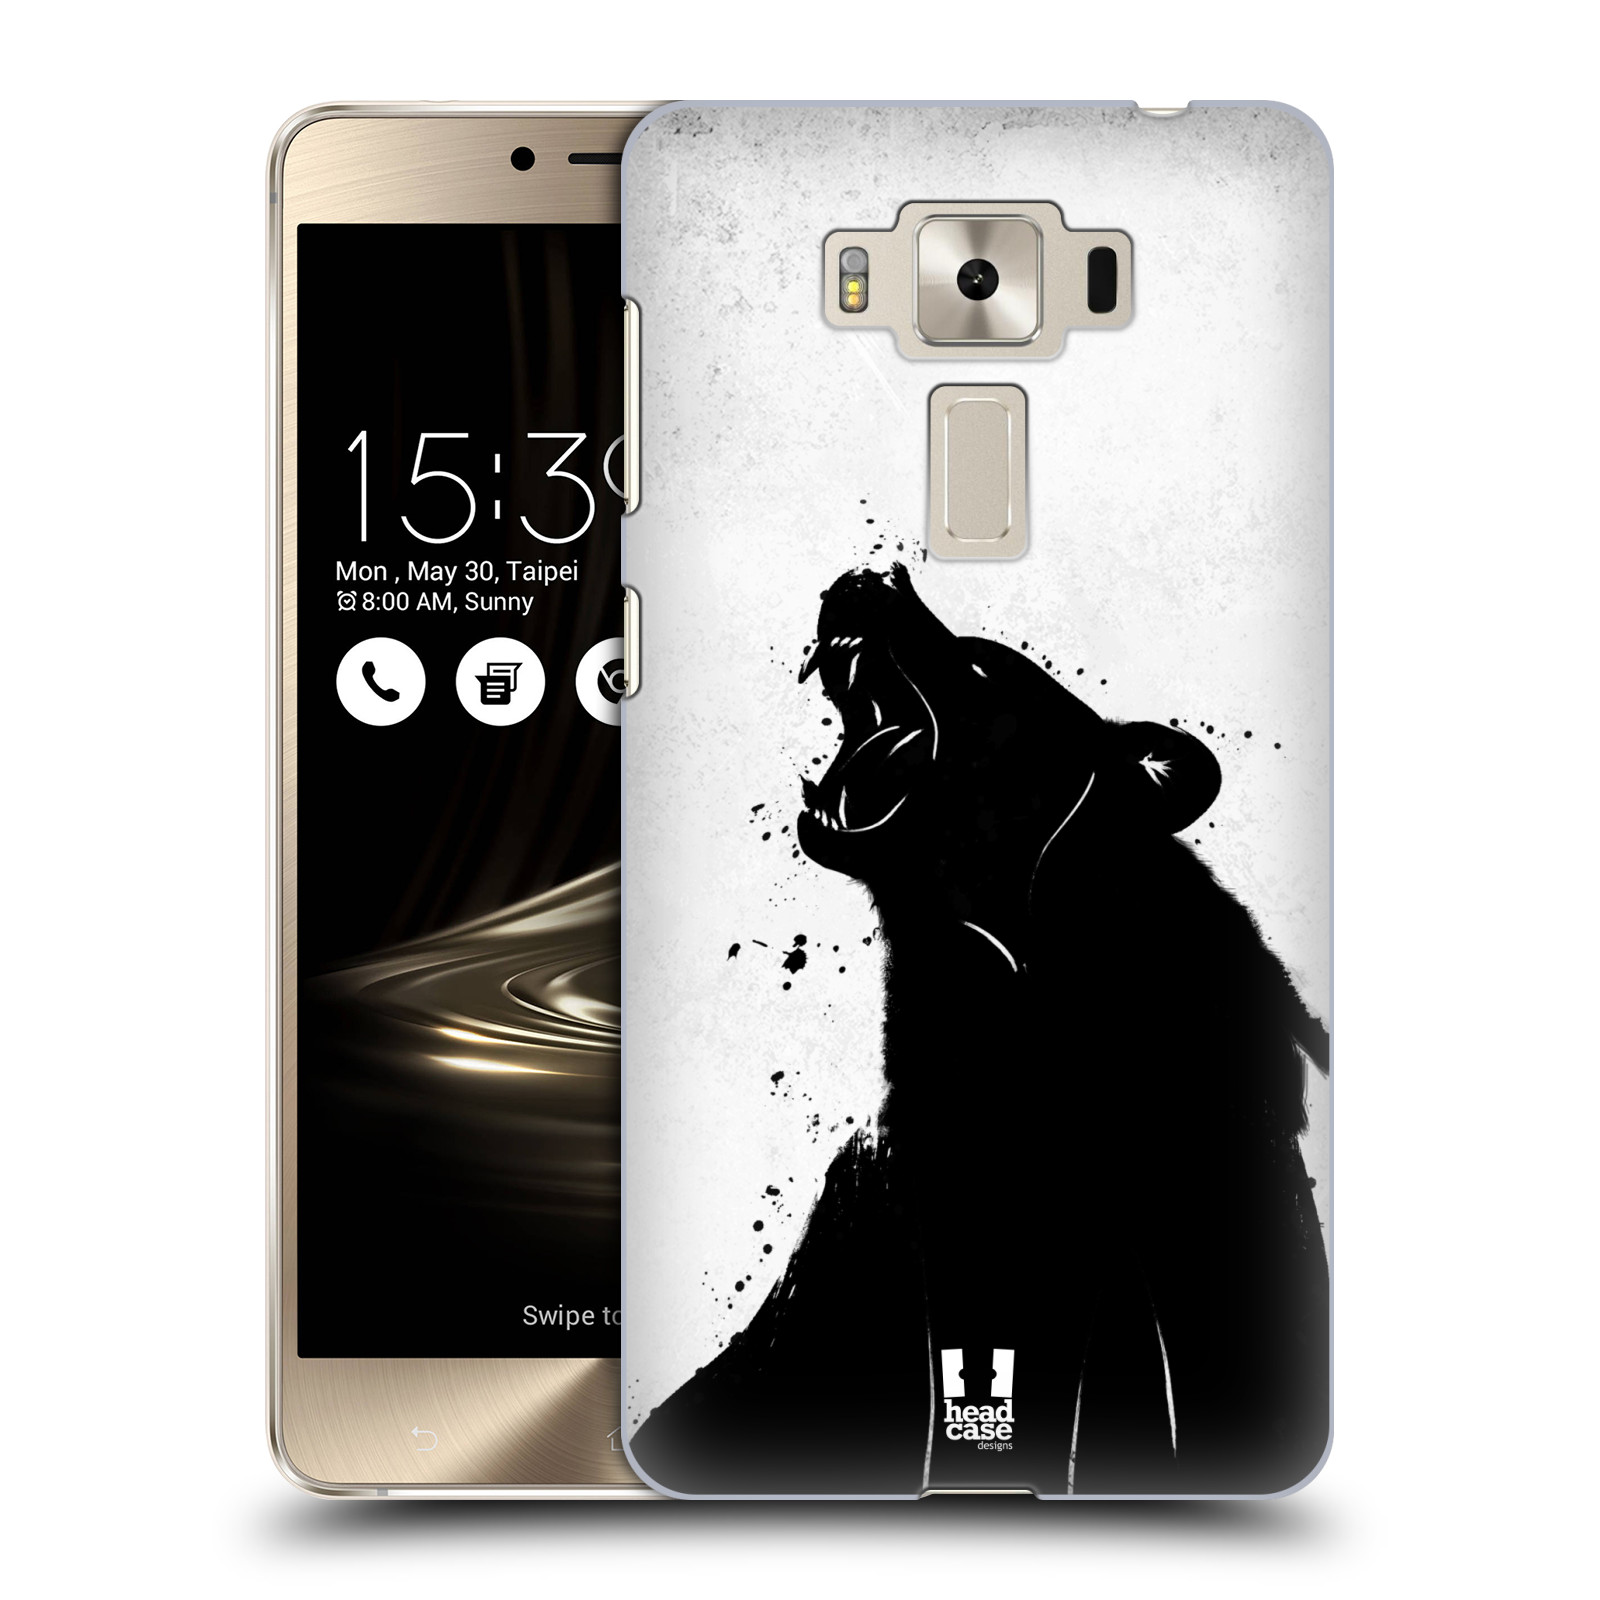 HEAD CASE plastový obal na mobil Asus Zenfone 3 DELUXE ZS550KL vzor Kresba tuš zvíře medvěd